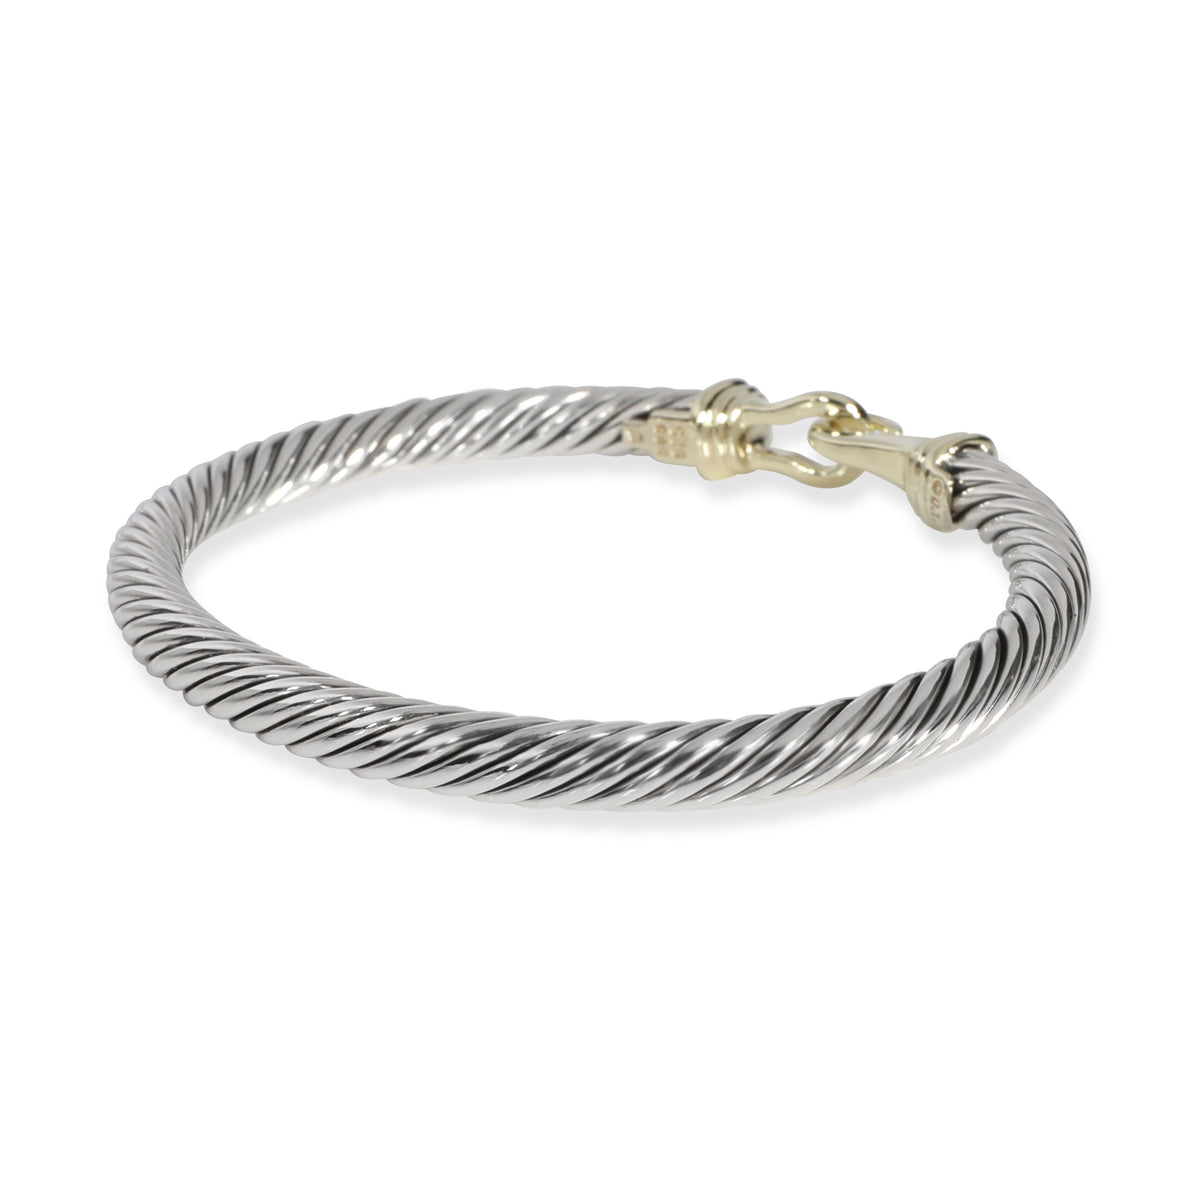 David Yurman Cable Hook Bracelet in 14K Yellow Gold & Sterling Silver